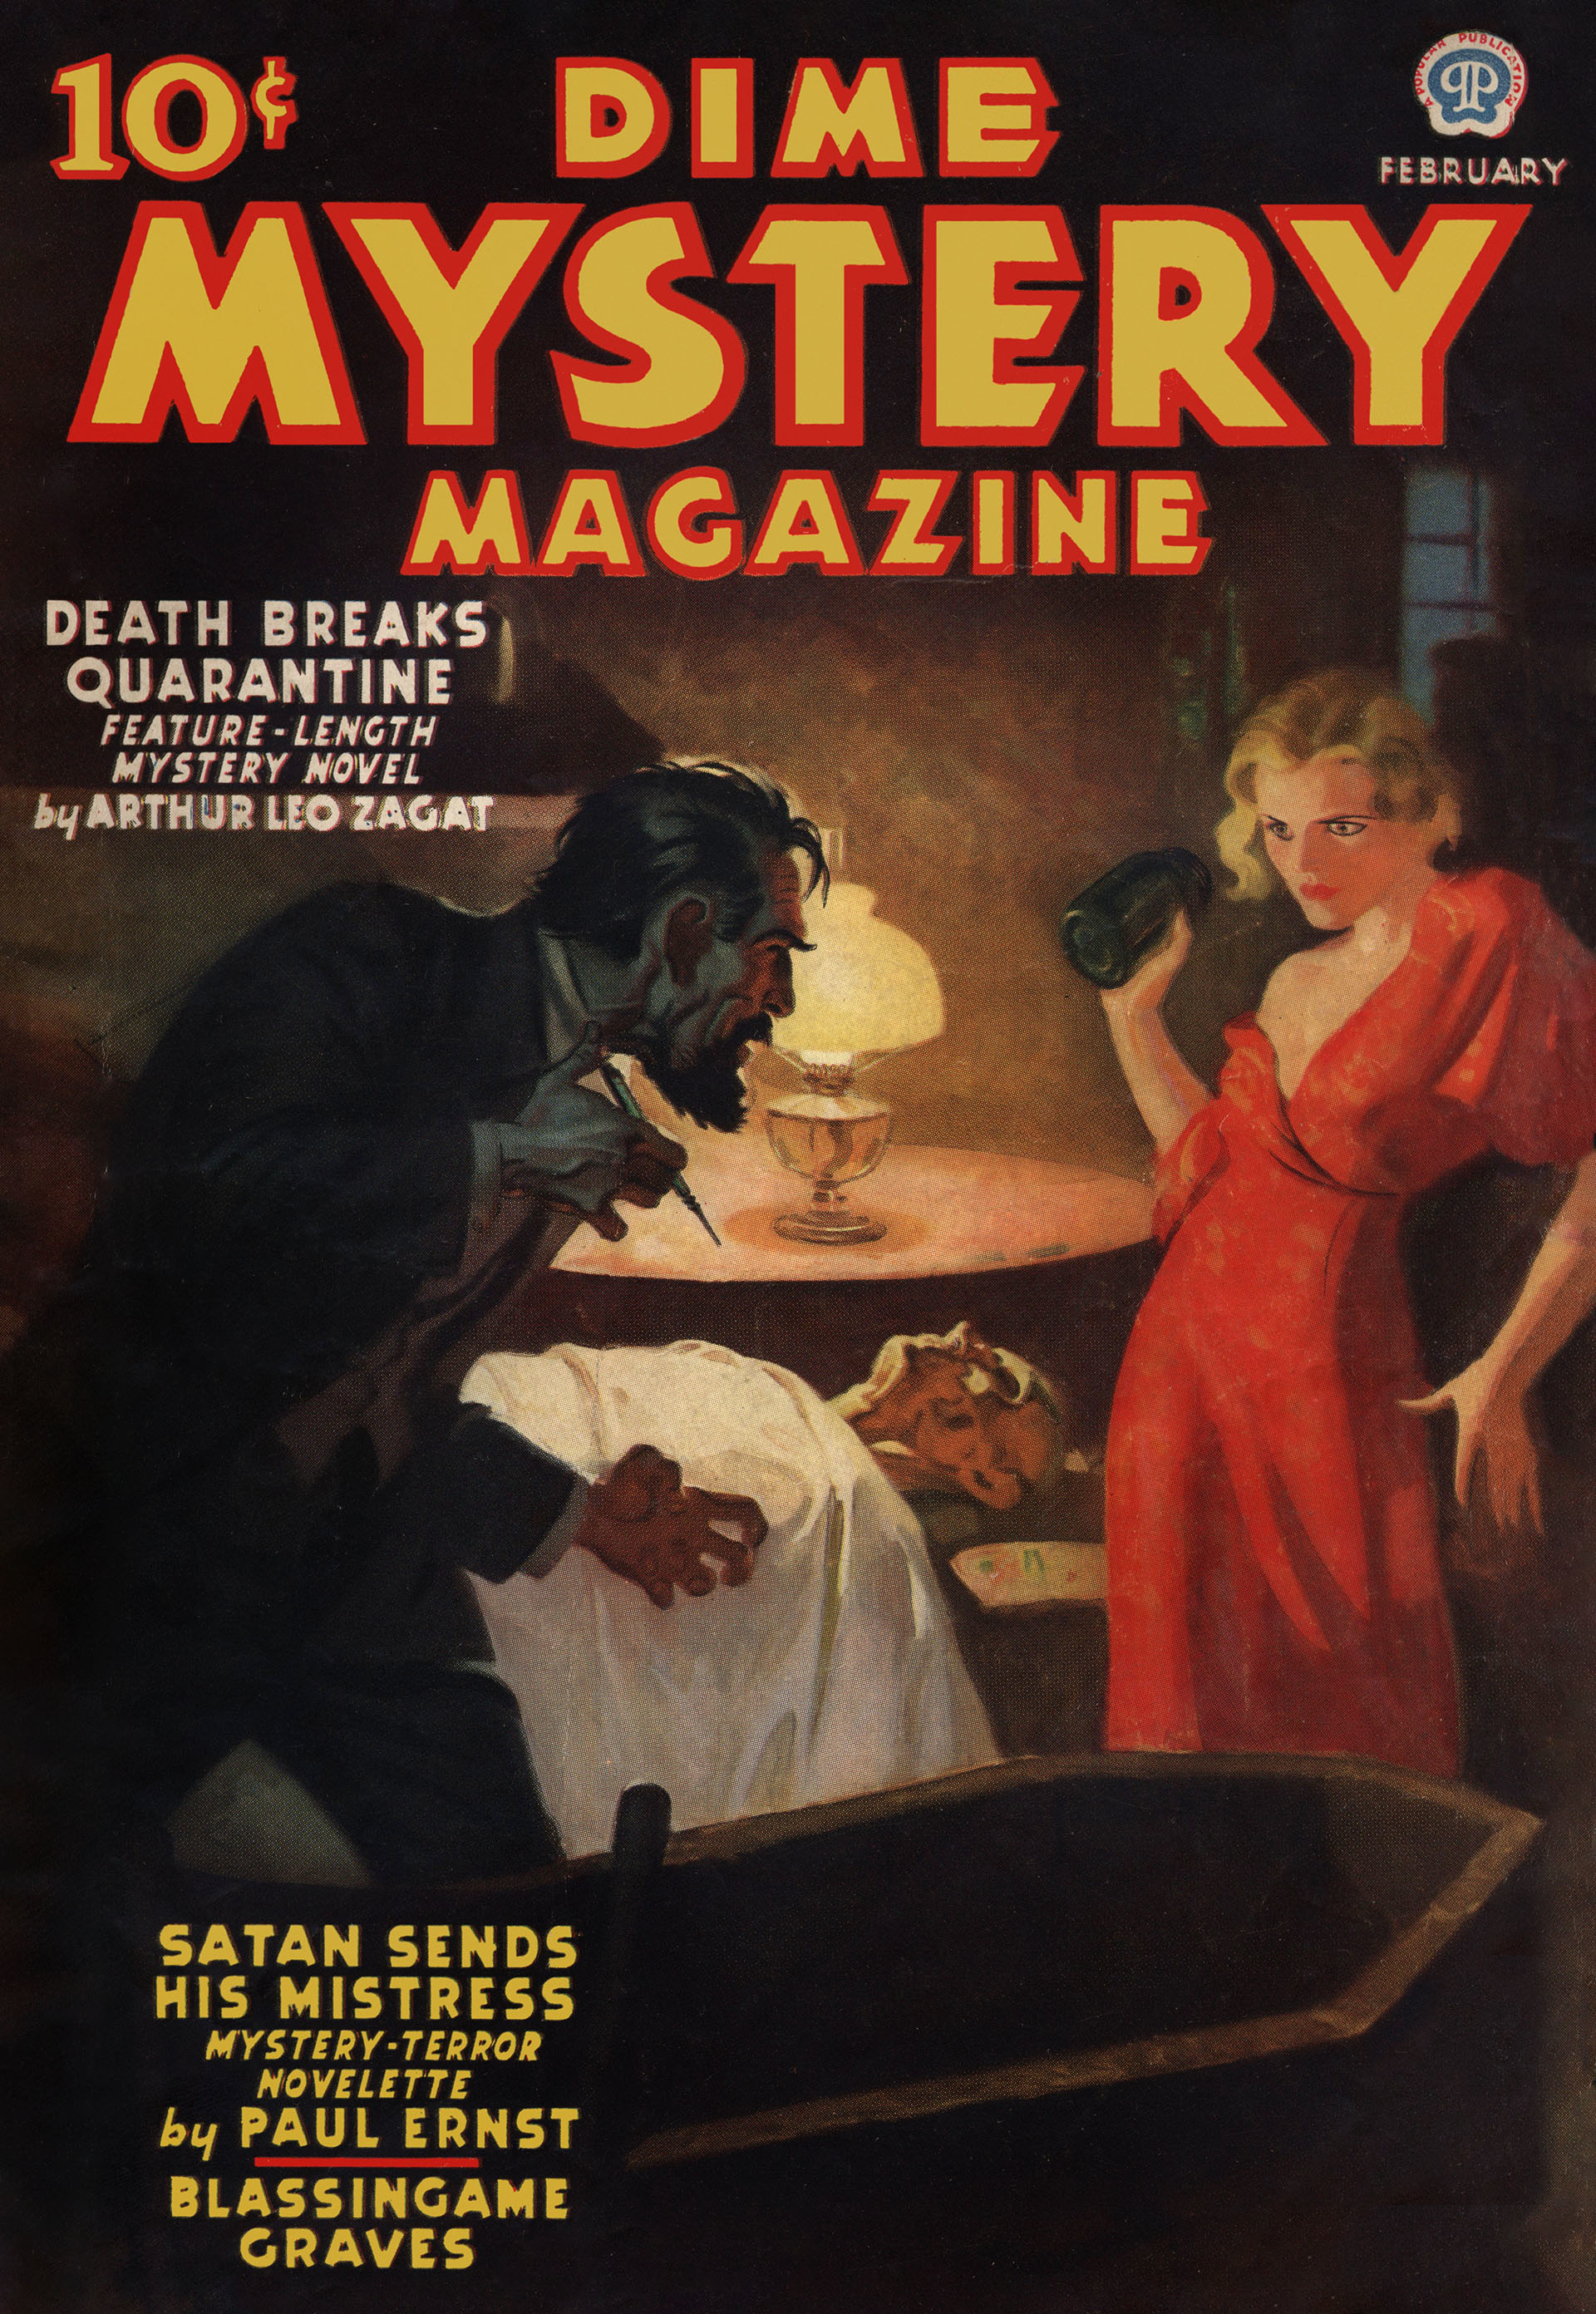 Dime Mystery Magazine, February 1937.